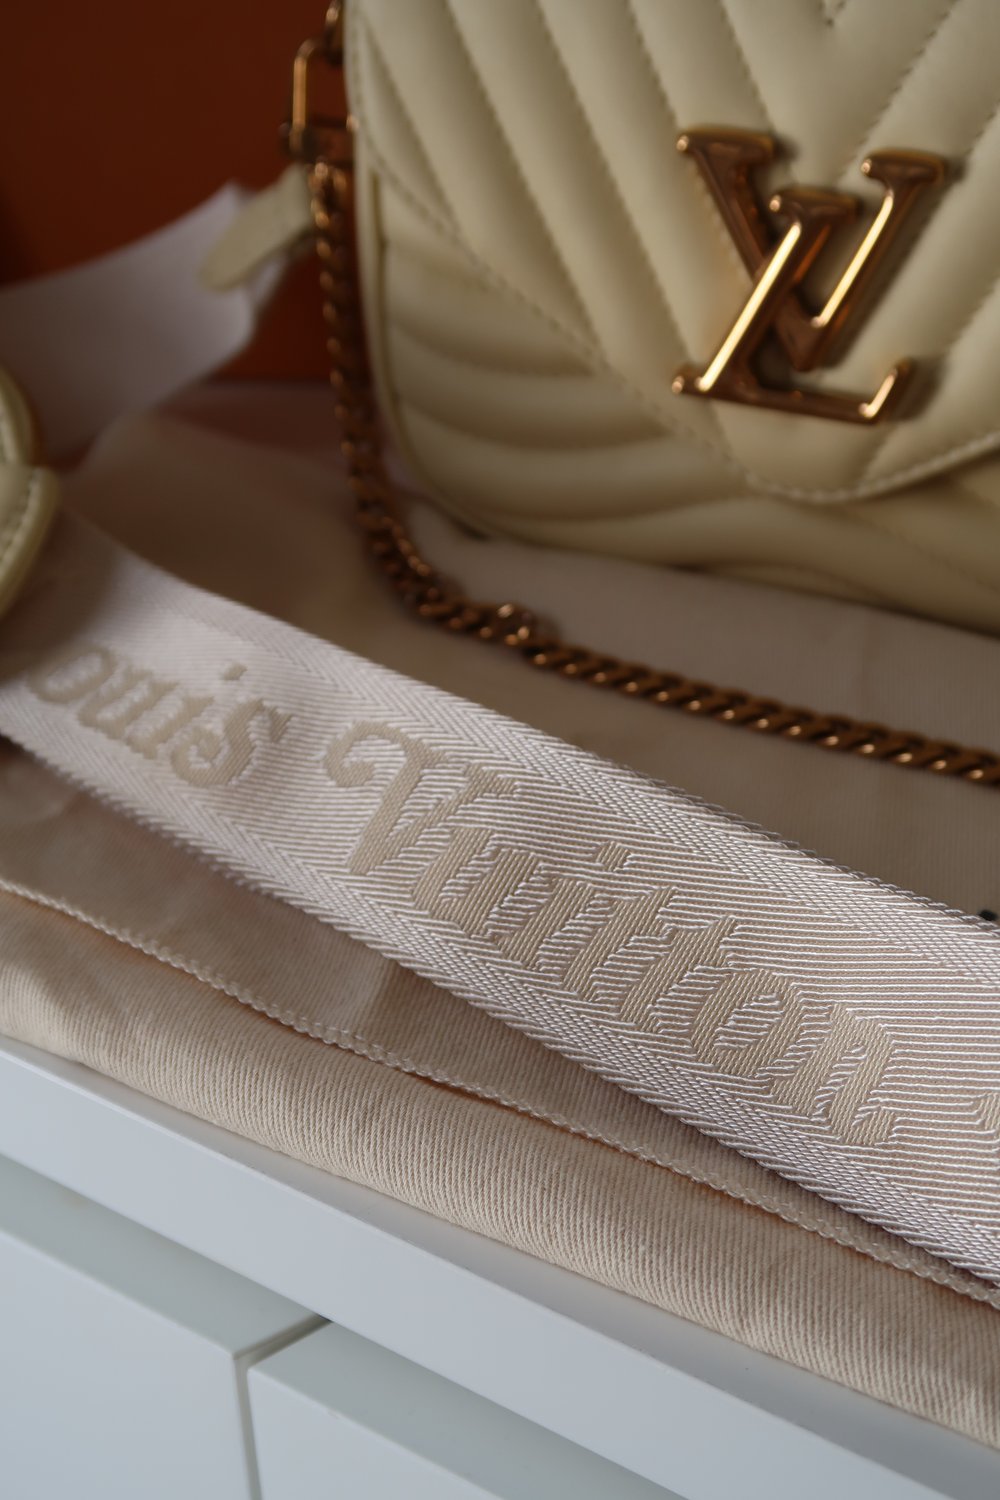 Louis Vuitton Multi Pochette Monogram Pink — Blaise Ruby Loves